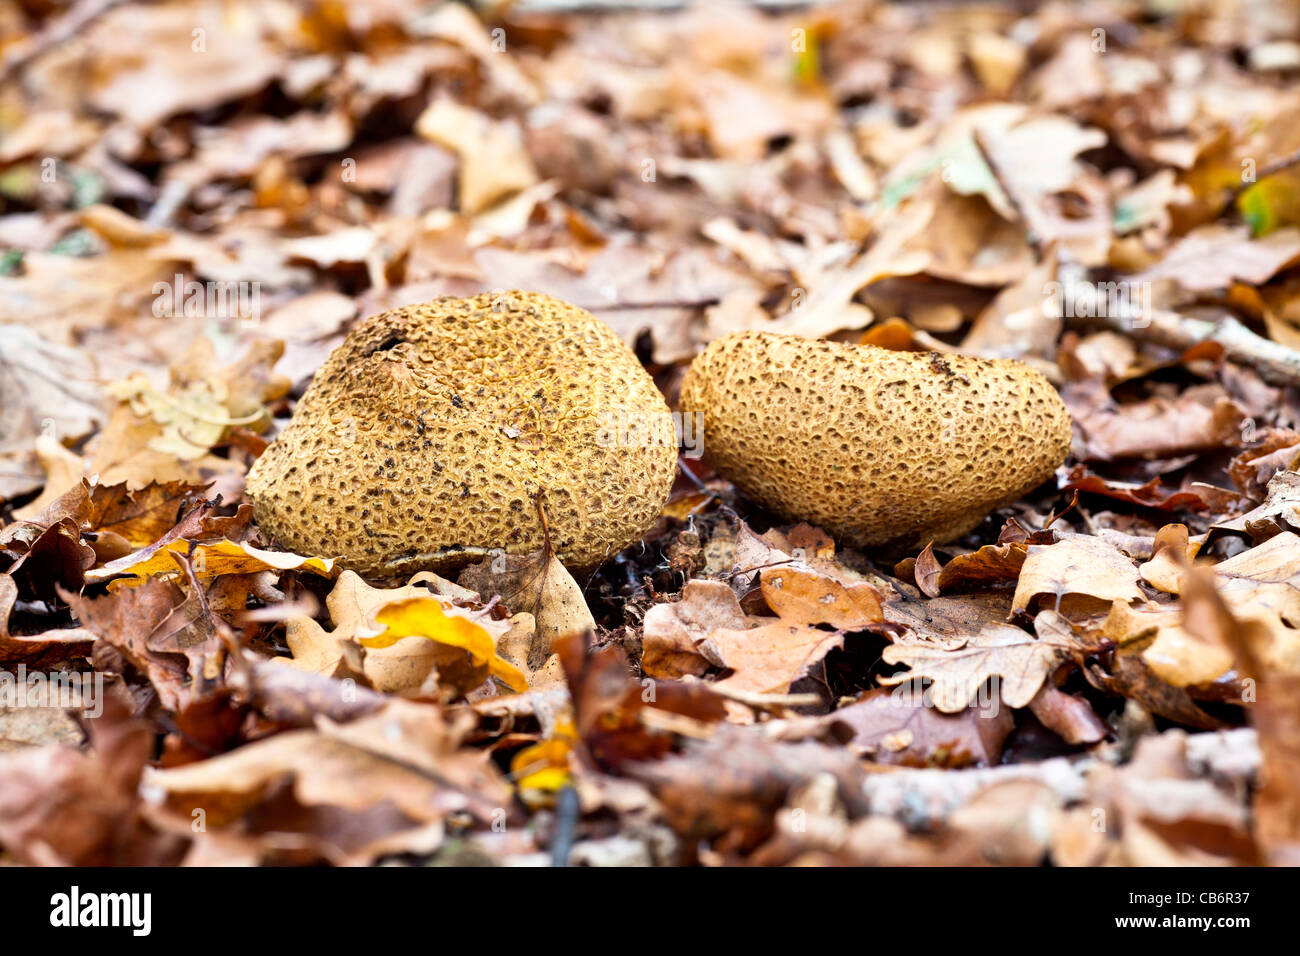 Autumn fungi - two puff balls, edible fruiting bodies (gasterothecium) on fallen English oak leaves Stock Photo